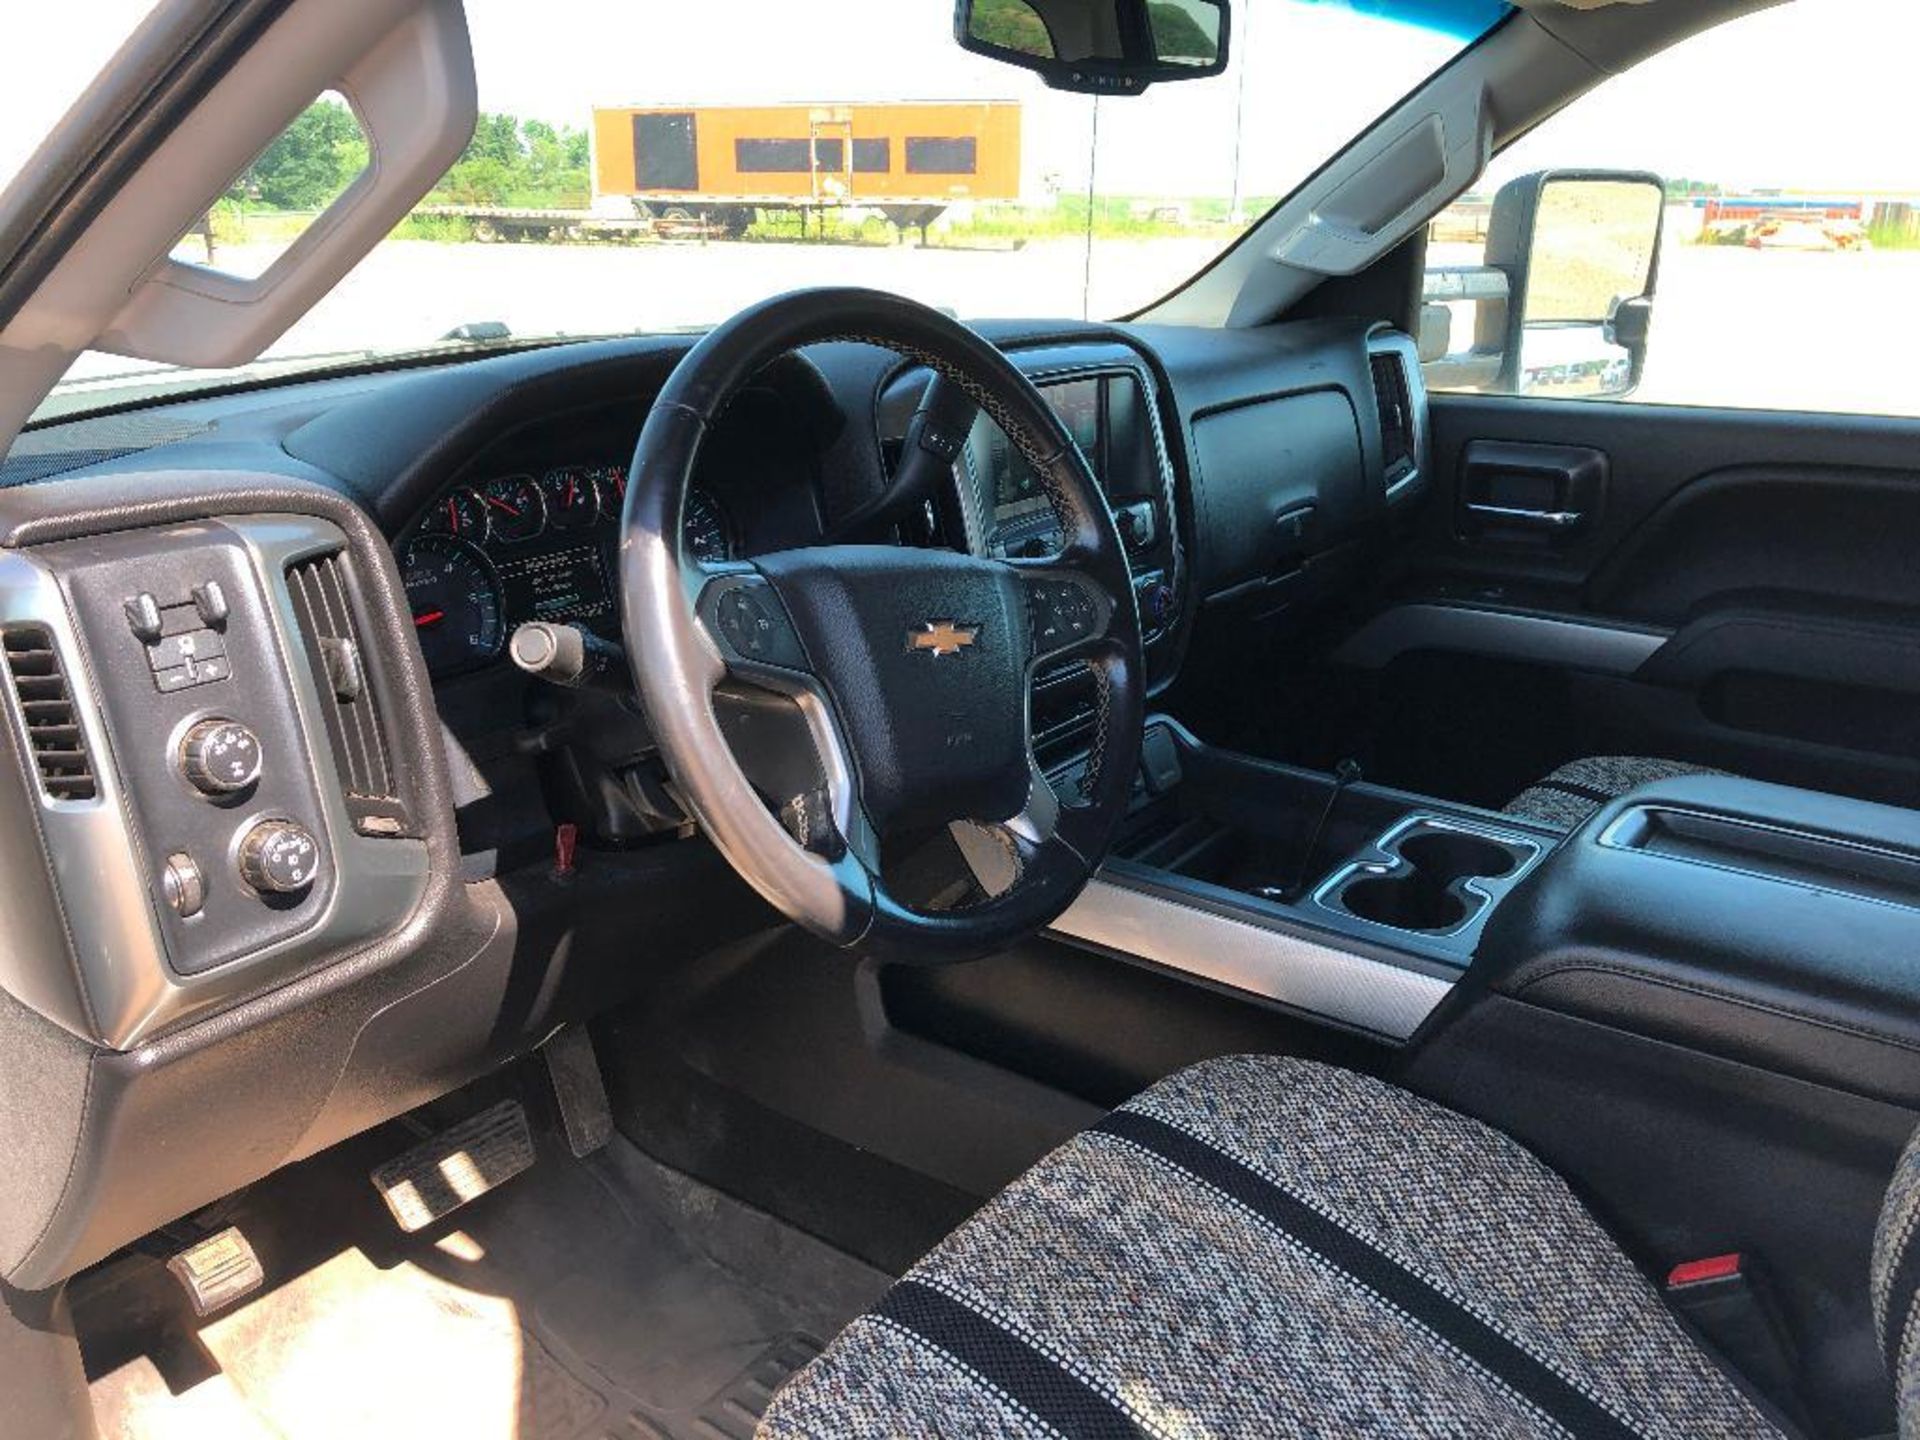 2015 Chevrolet Silverado Crew Cab 4X4 Pickup Truck, VIN # 1GC1KVEG8FF666384 - Image 6 of 11